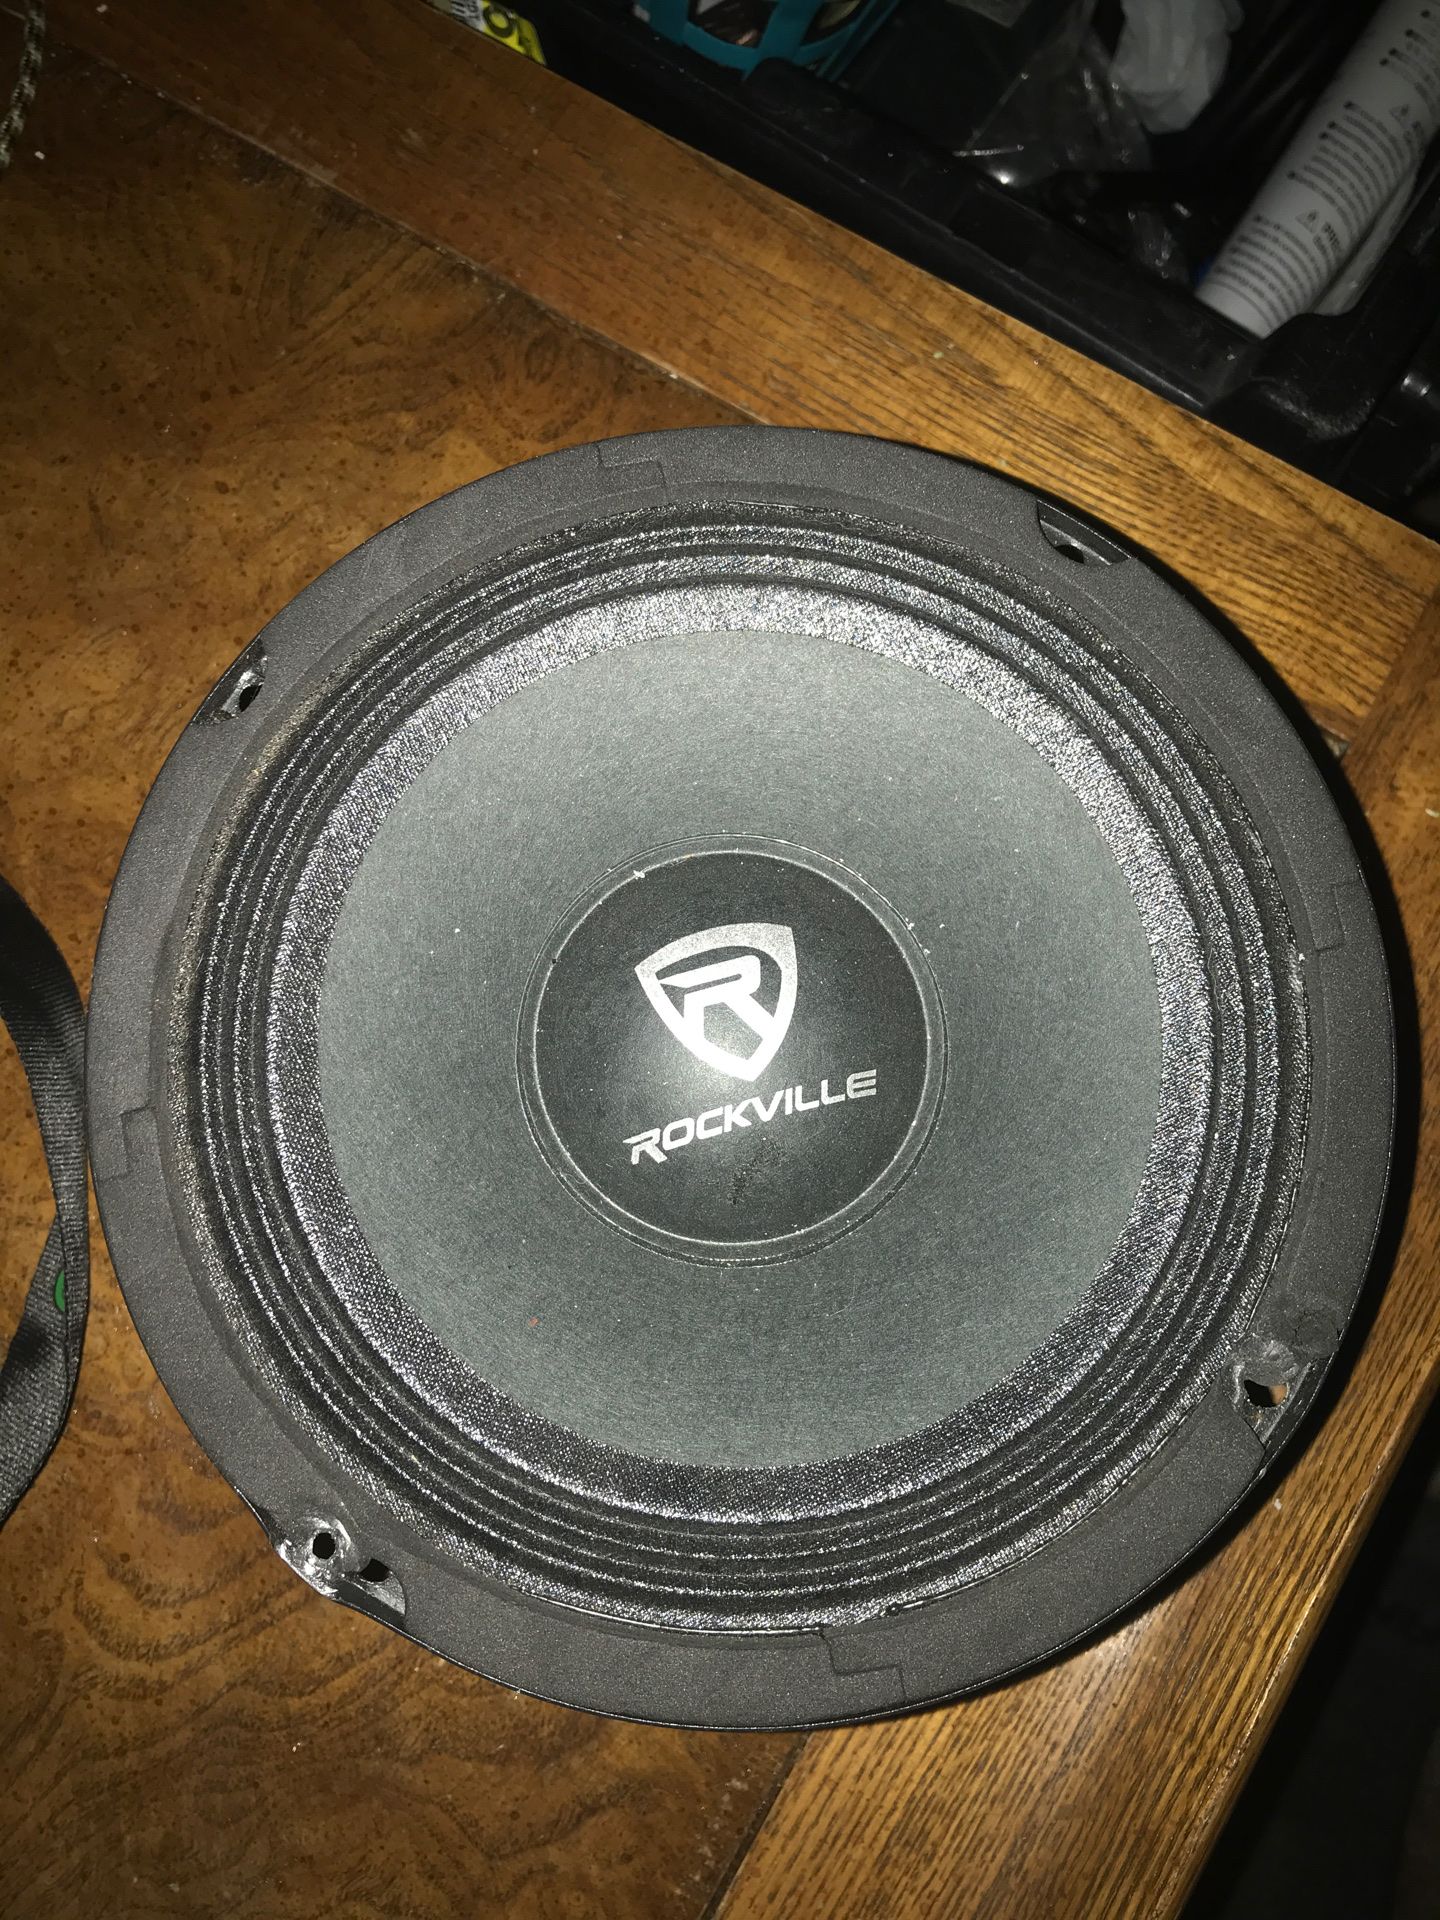 Rockville Audio 6.5 midrange speakers